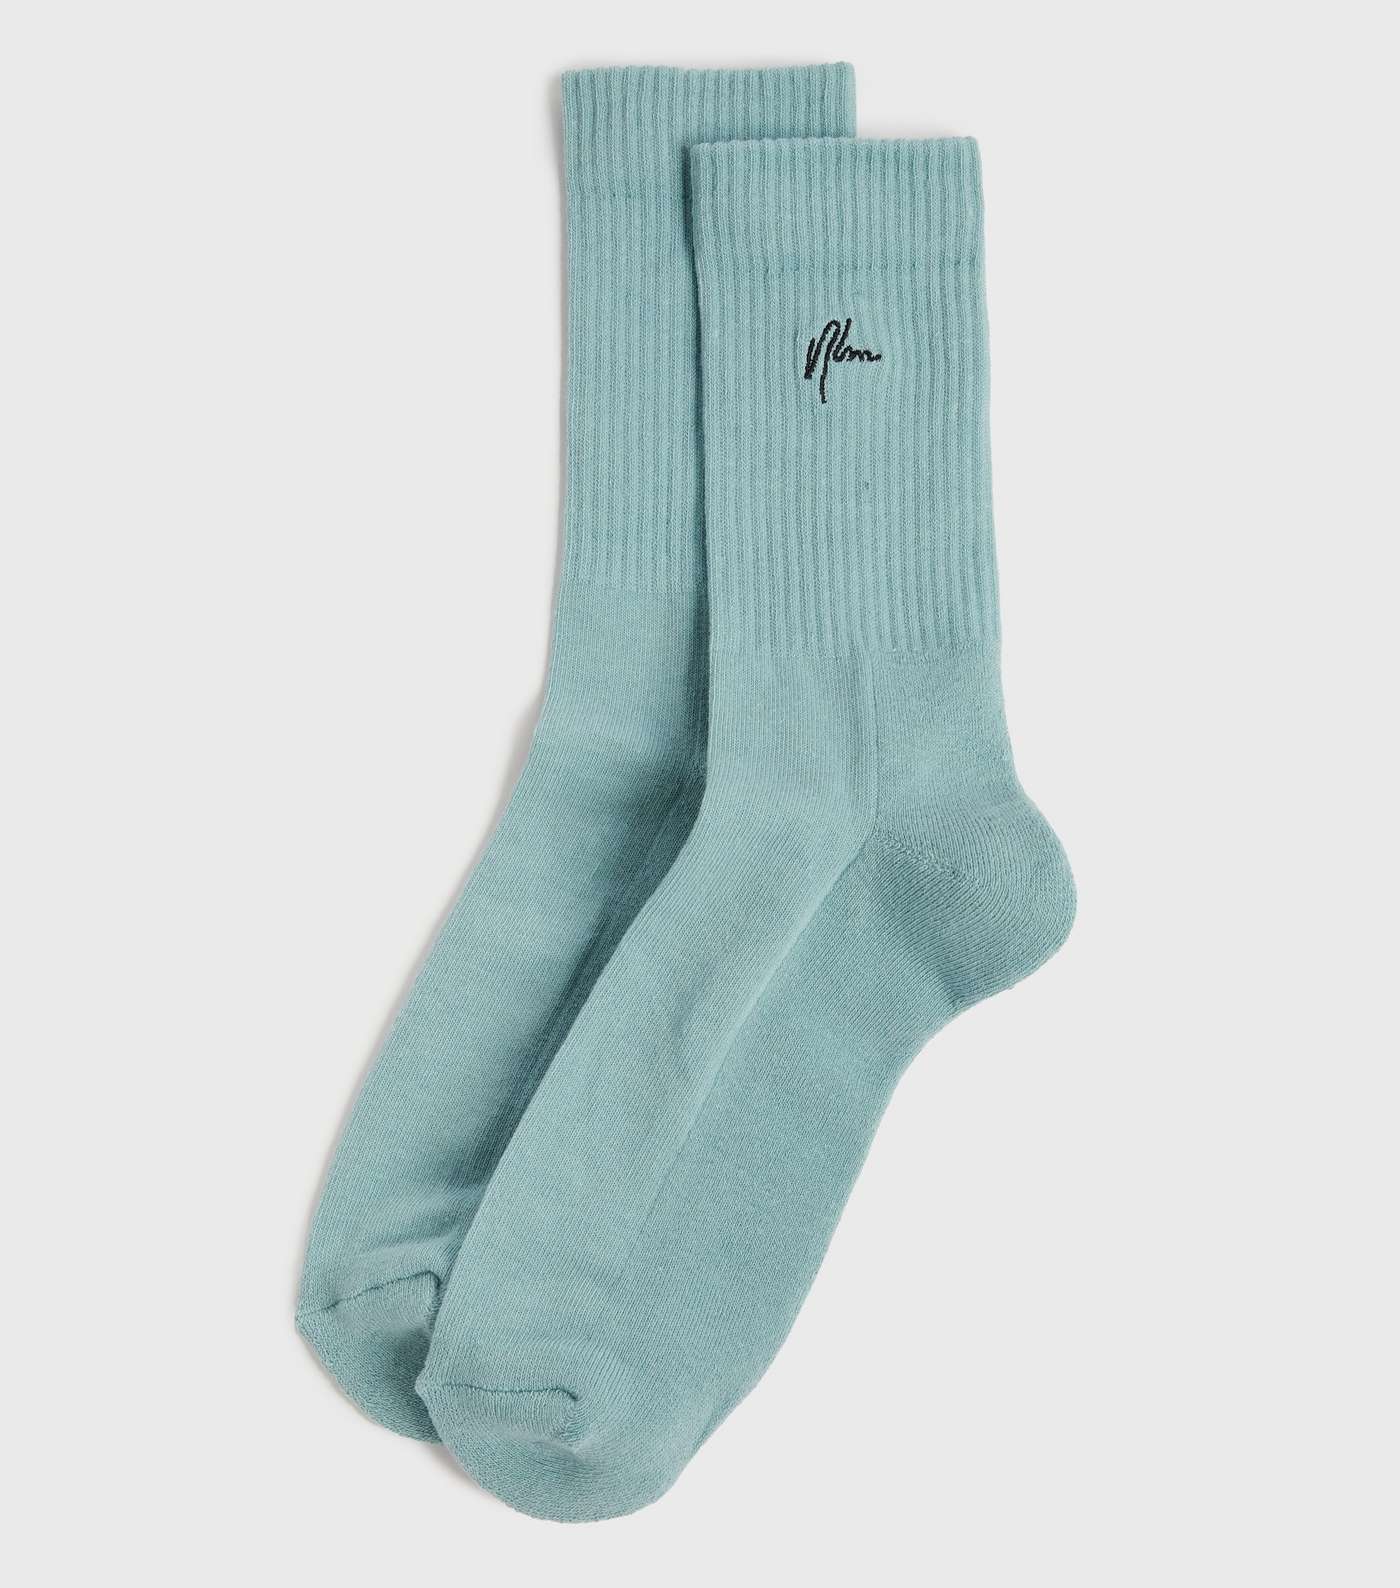 Pale Blue Ribbed NLM Embroidered Socks